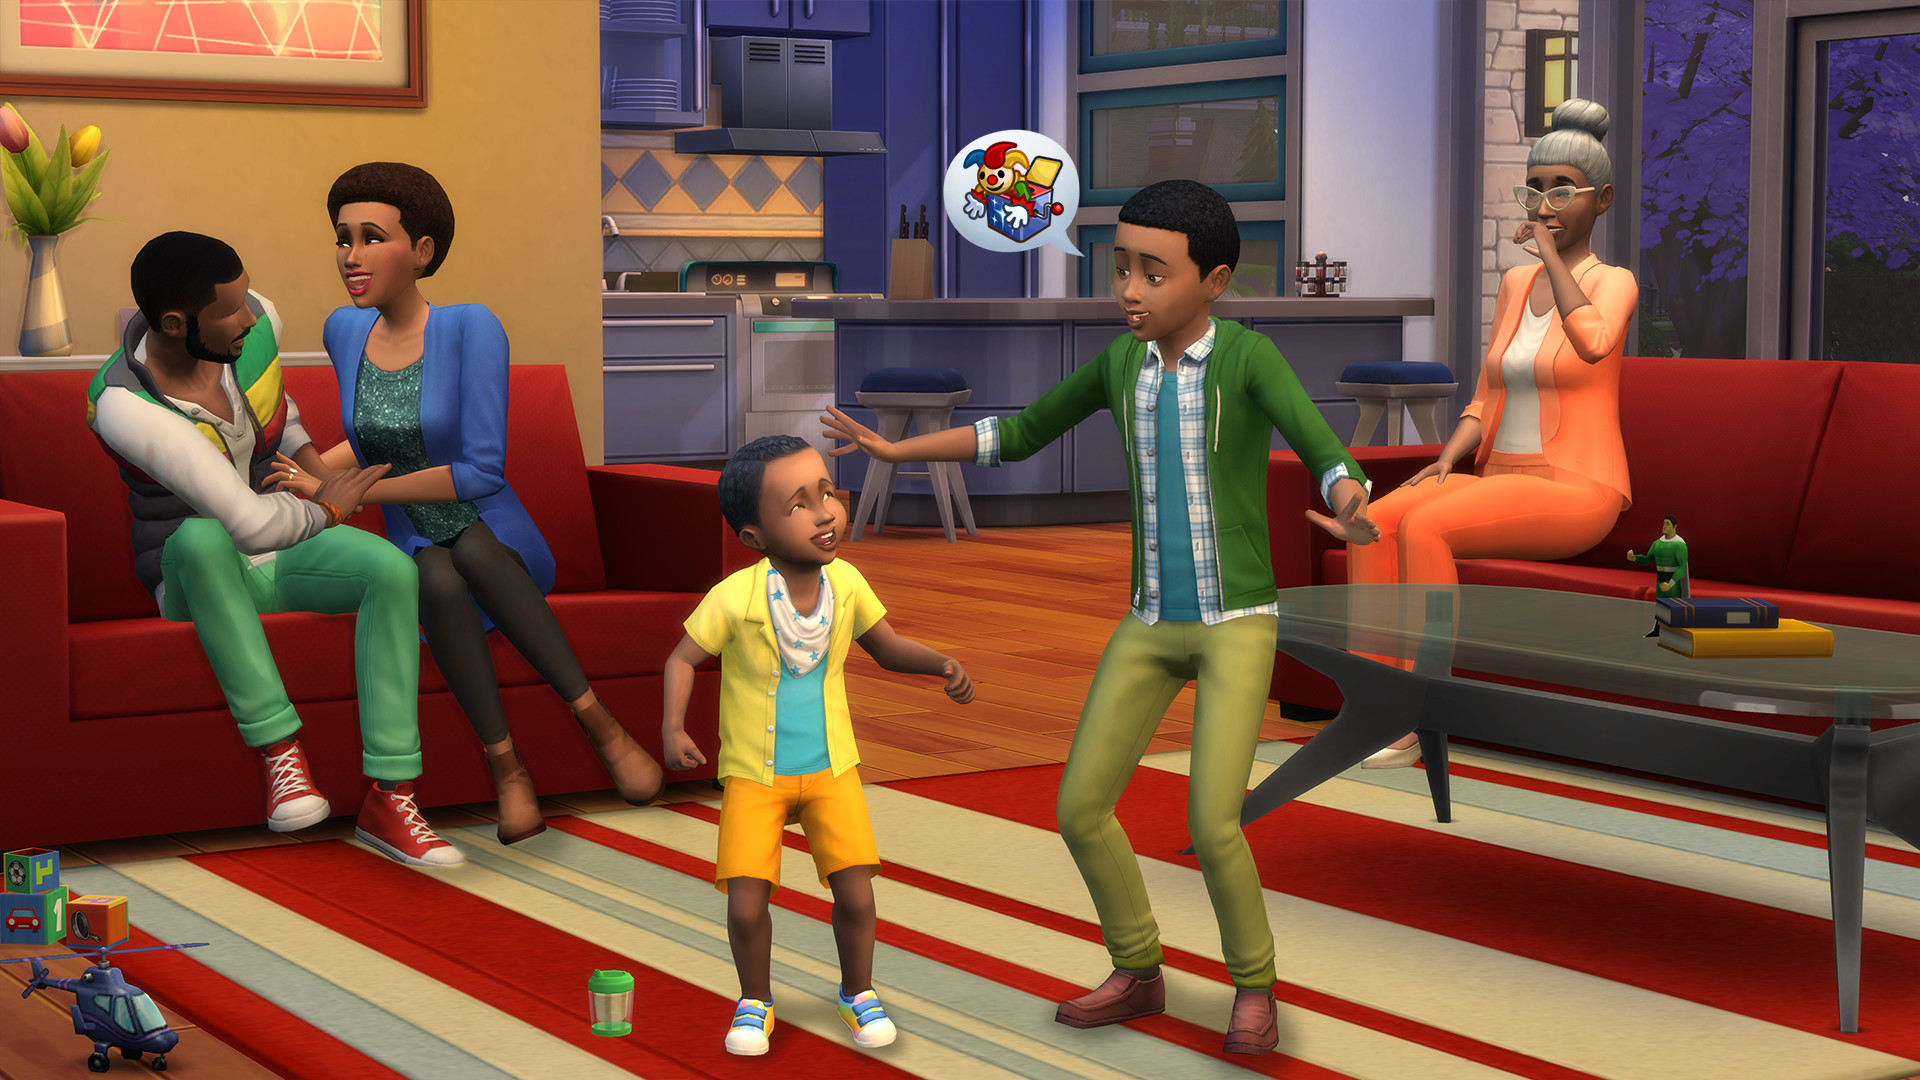 The Sims 4 - Toddler Stuff - Origin PC [Online Game Code]